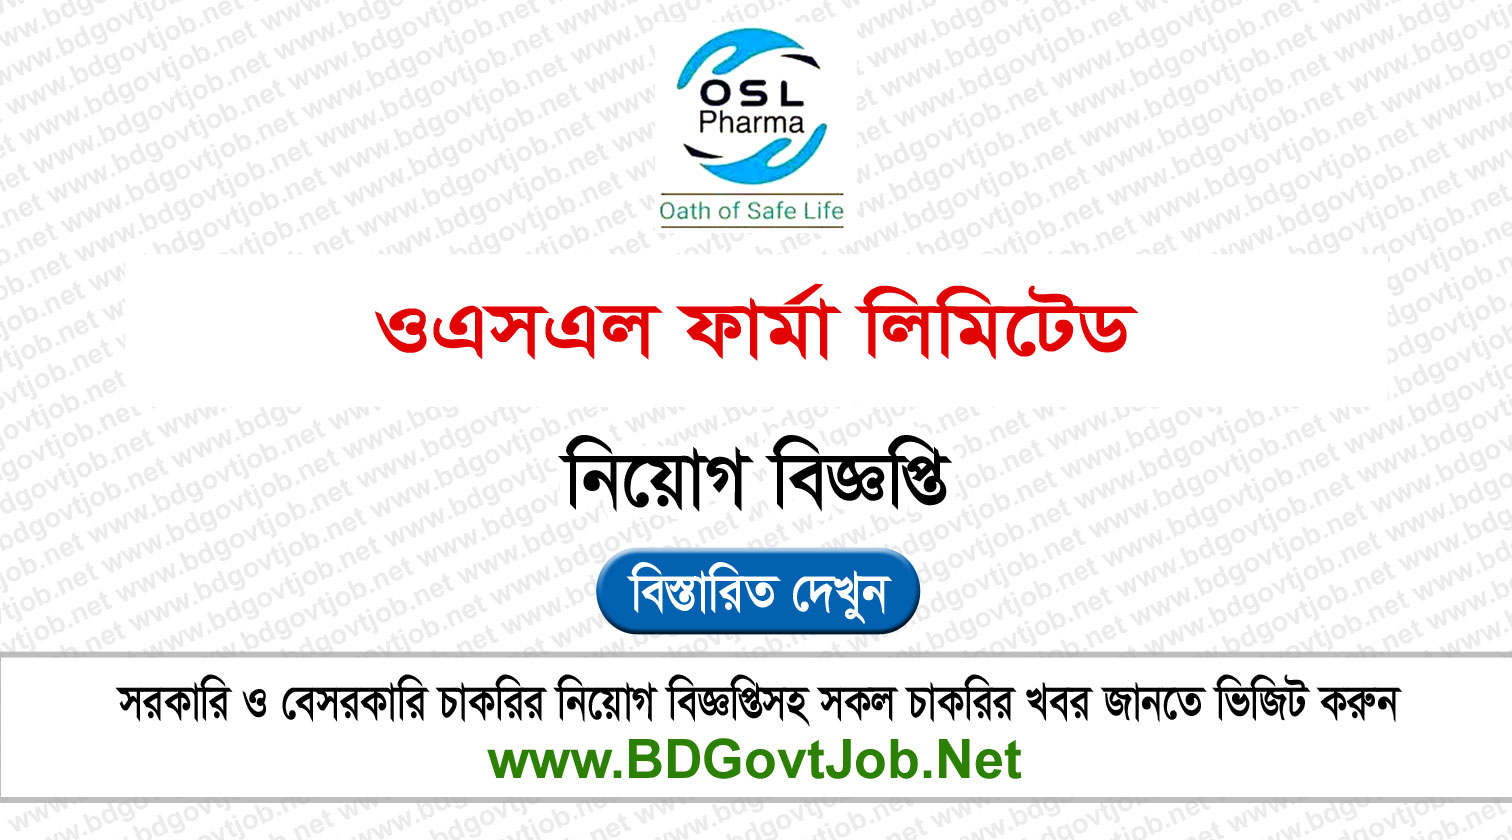 OSL Pharma Limited Job Circular